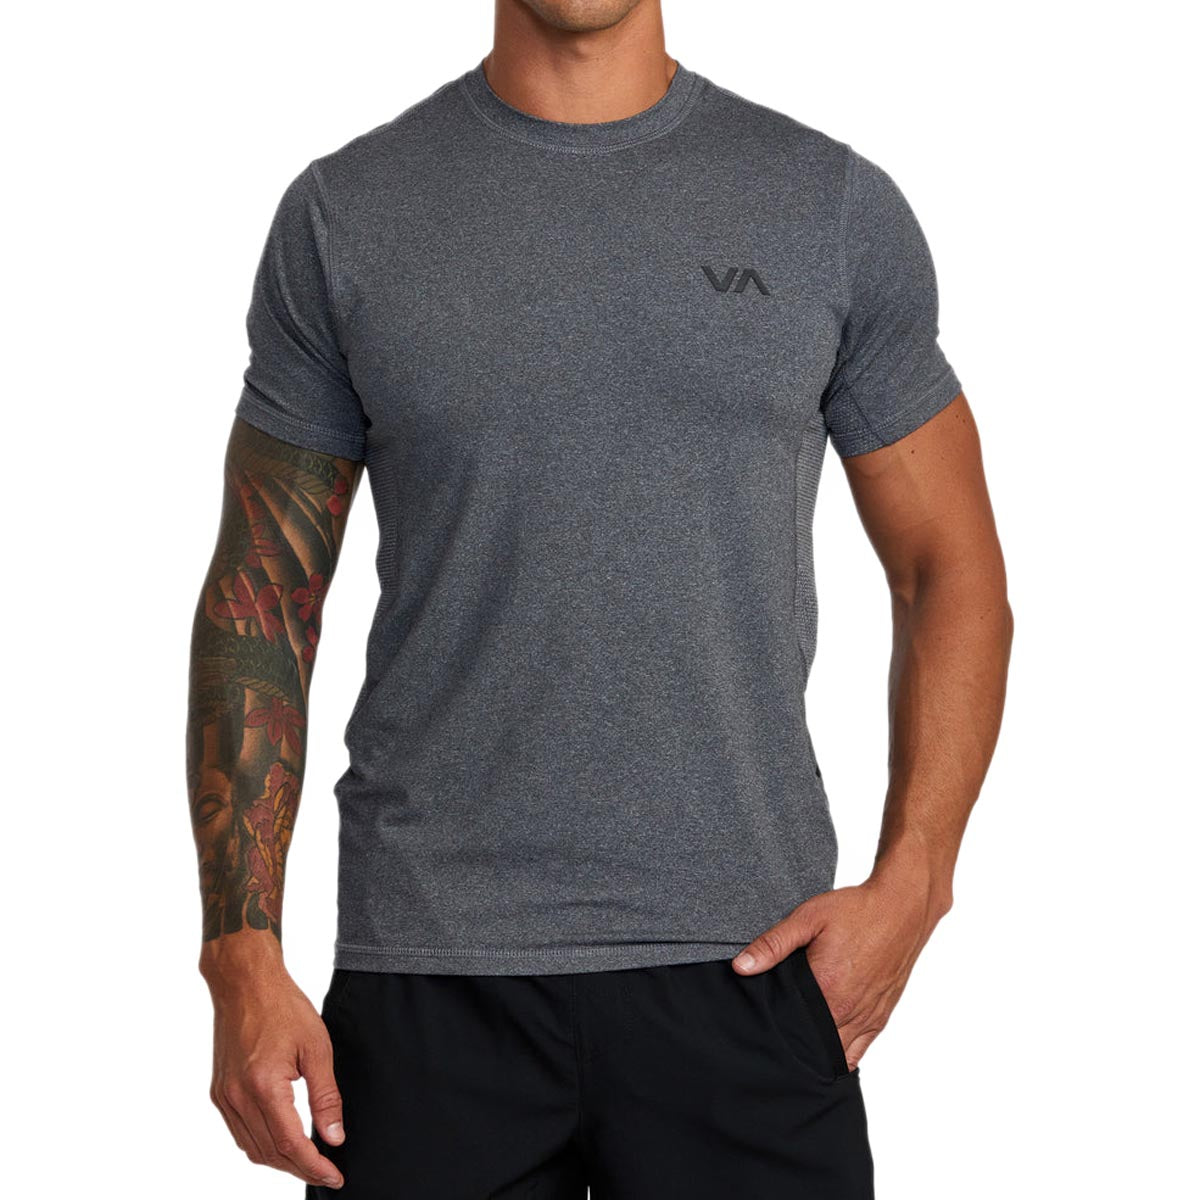 RVCA Sport Vent Shirt - Charcoal Heather image 1